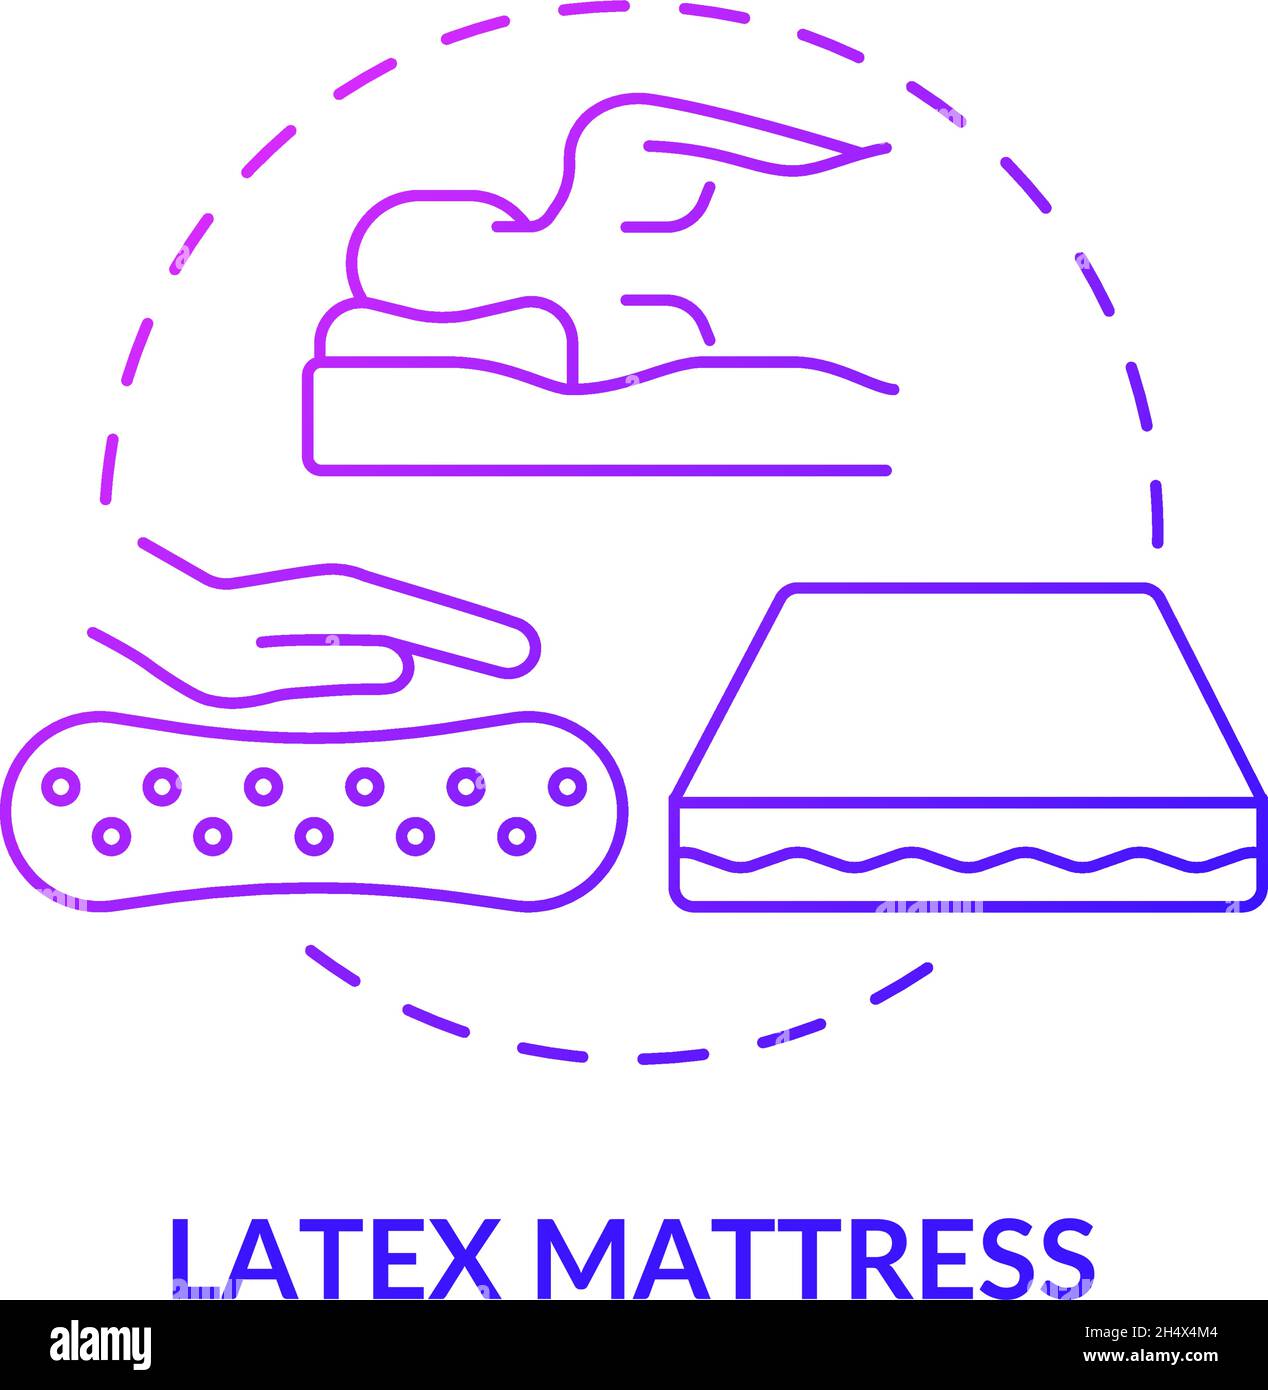 Latex mattress purple gradient concept icon Stock Vector Image & Art - Alamy